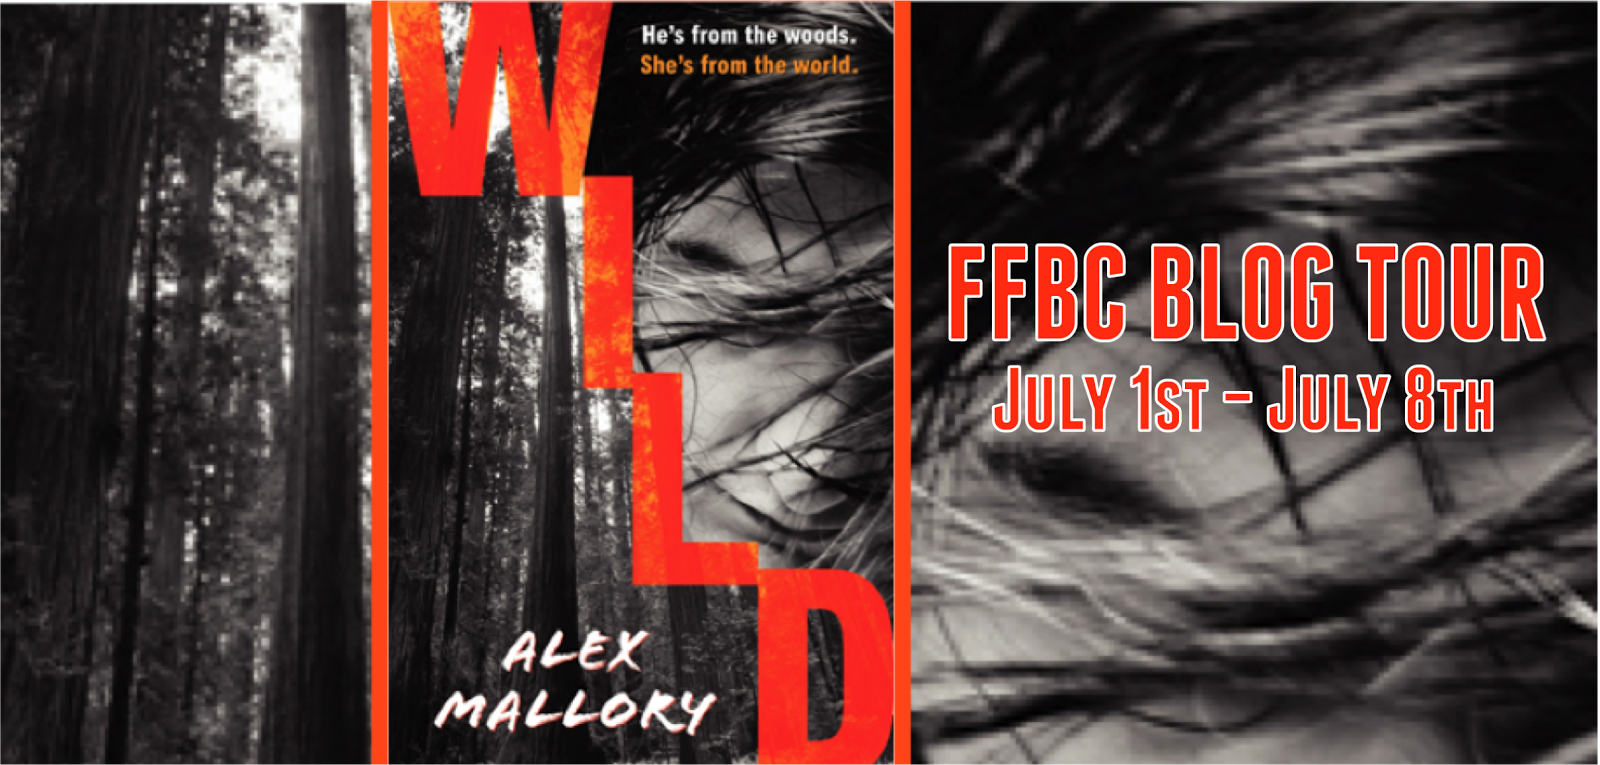 http://theunofficialaddictionbookfanclub.blogspot.com/2014/07/ffbc-blog-tour-wild-by-alex-mallory.html